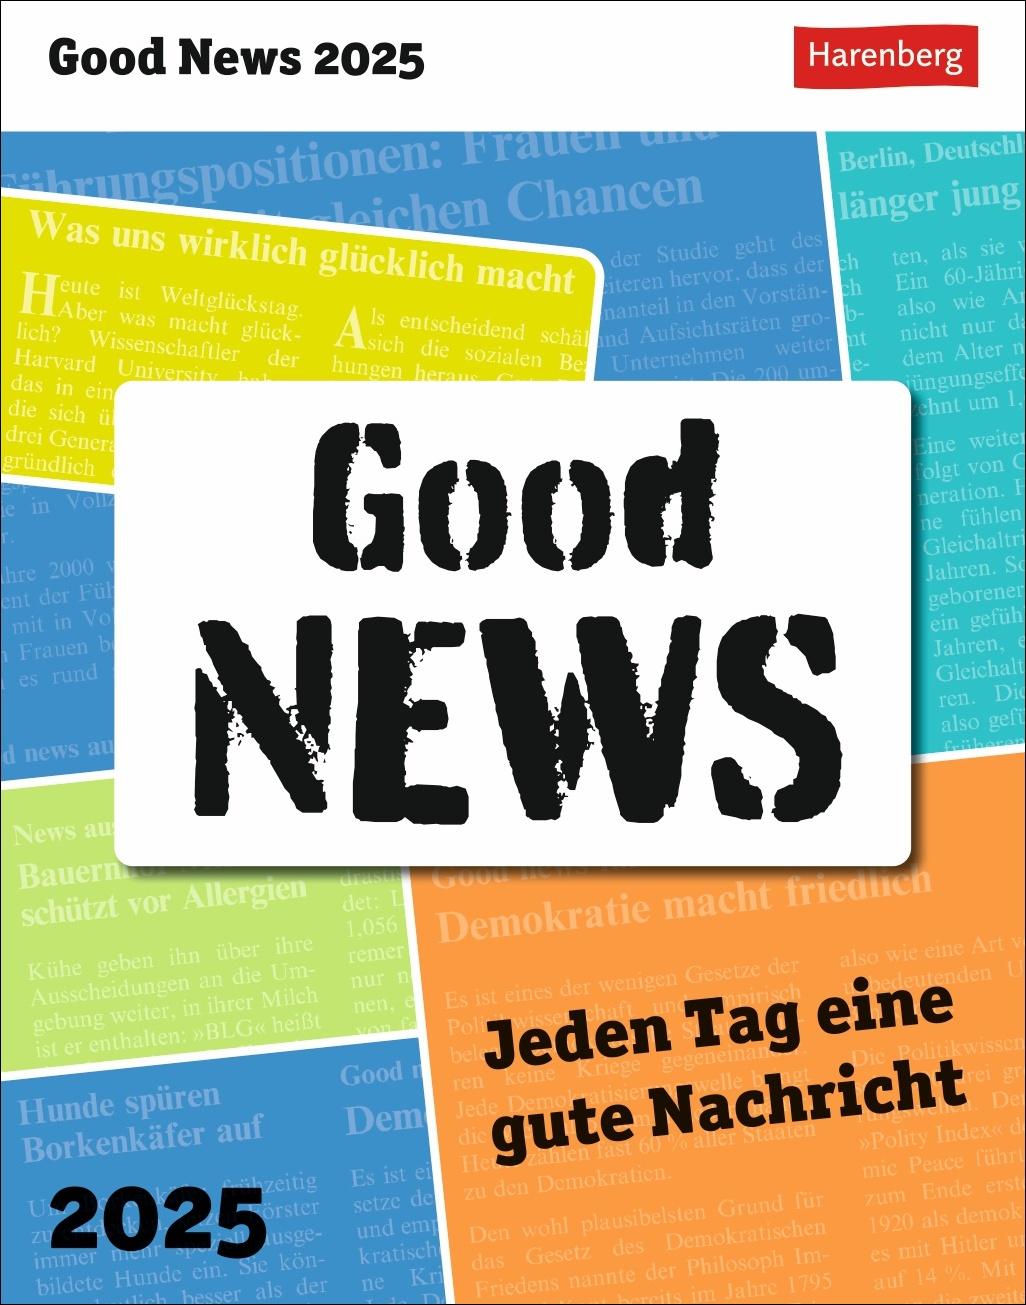 Kalendár/Diár Good News Tagesabreißkalender 2025 - Jeden Tag eine gute Nachricht 